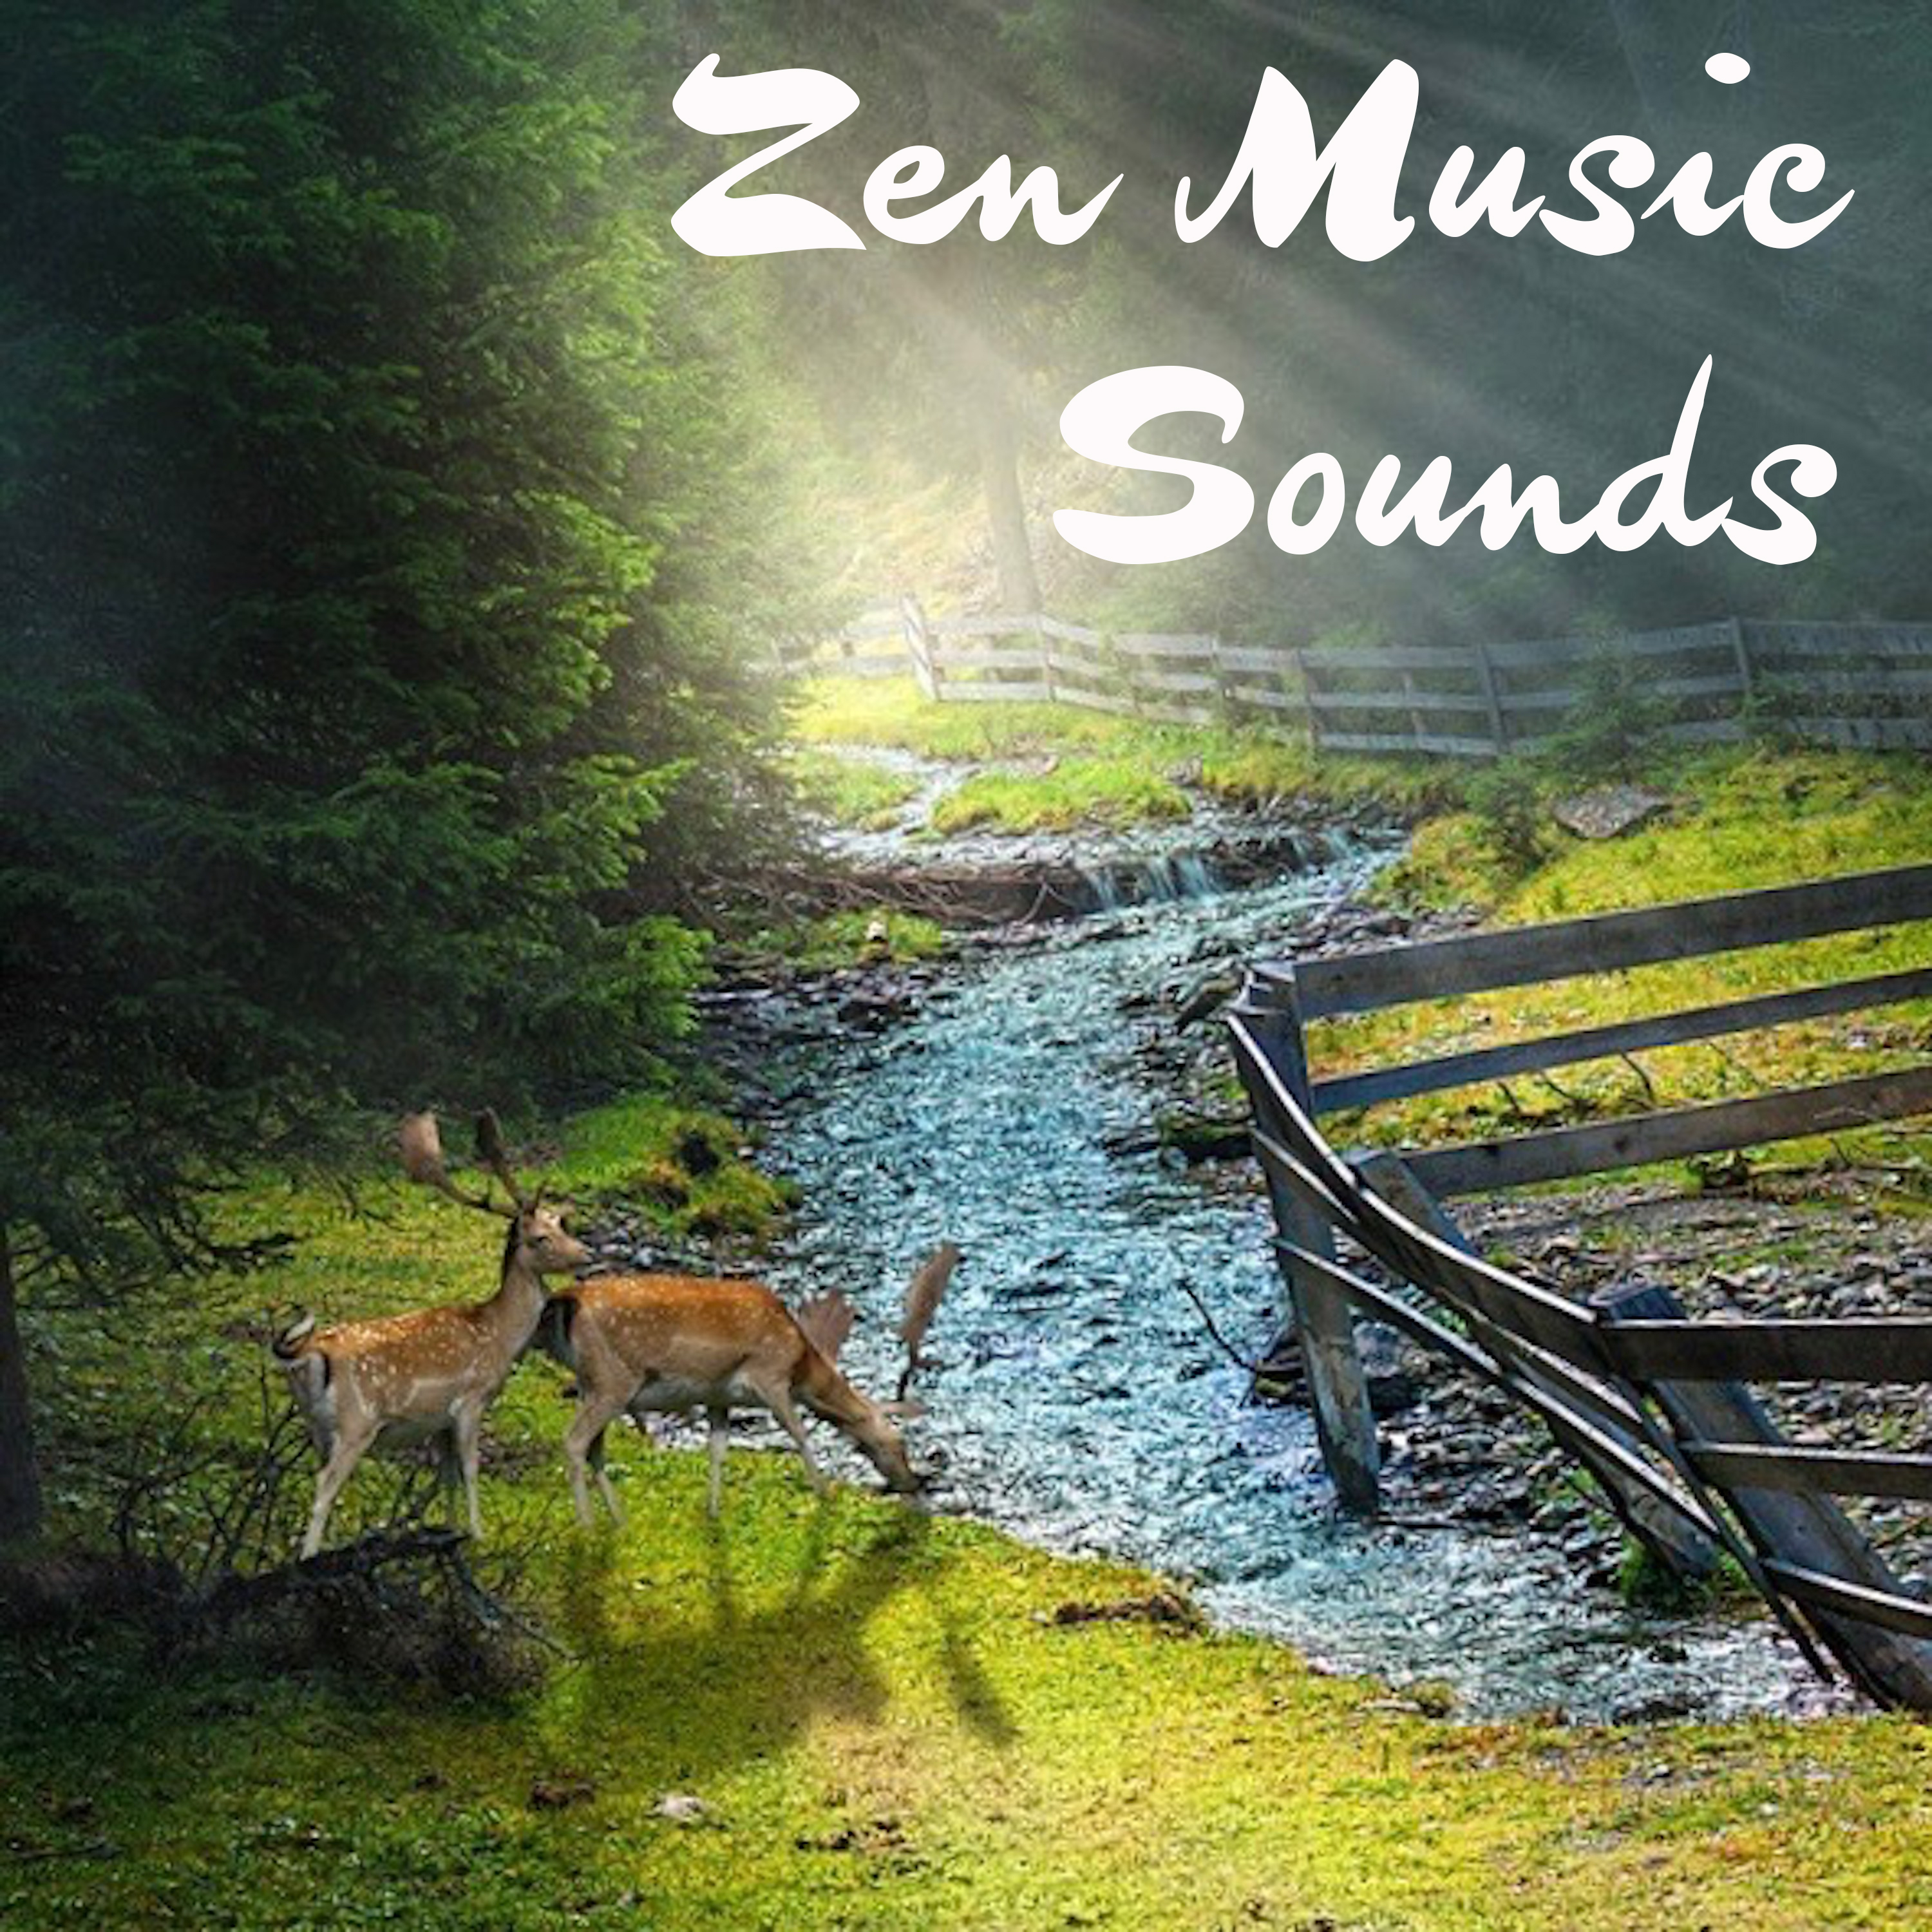 14 Zen Music Sounds - Rain and Waves